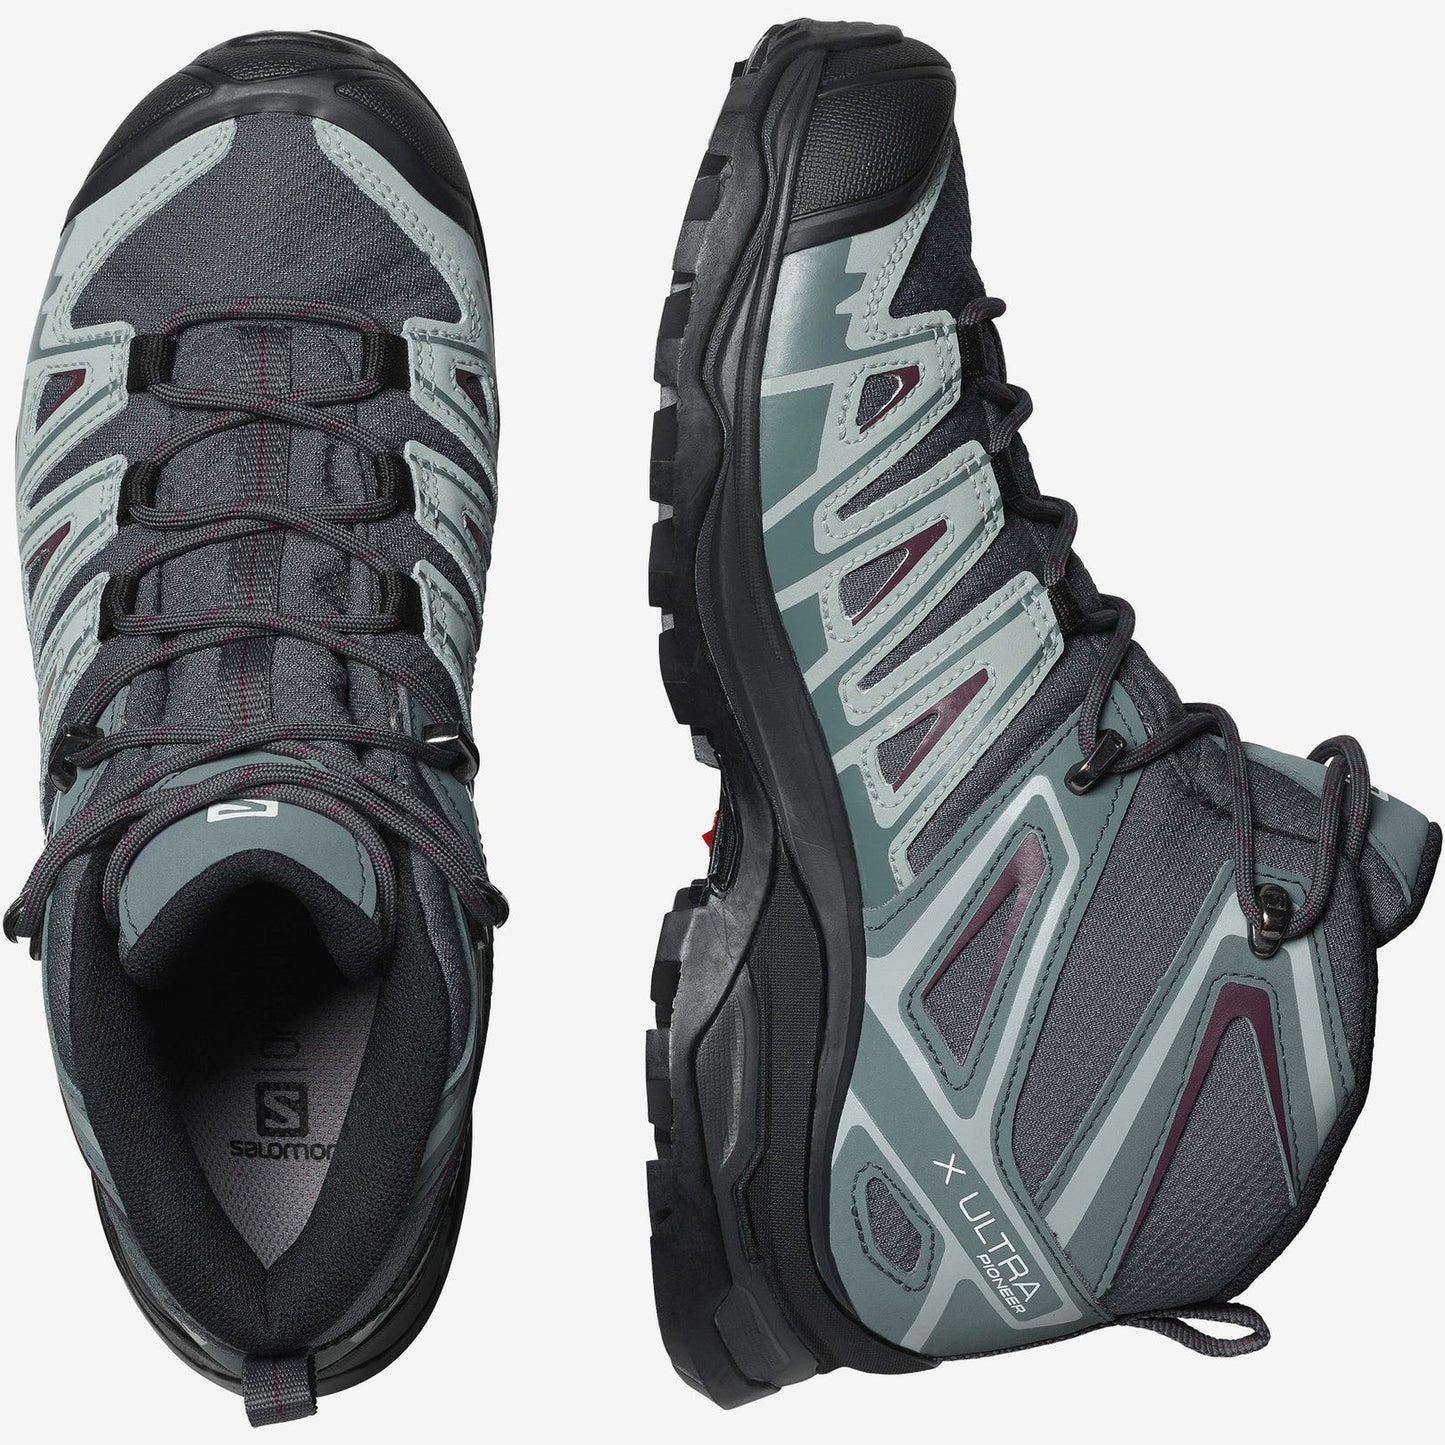 Salomon Women's X Ultra Pioneer Mid Climasalomon Waterproof Hiking Boots